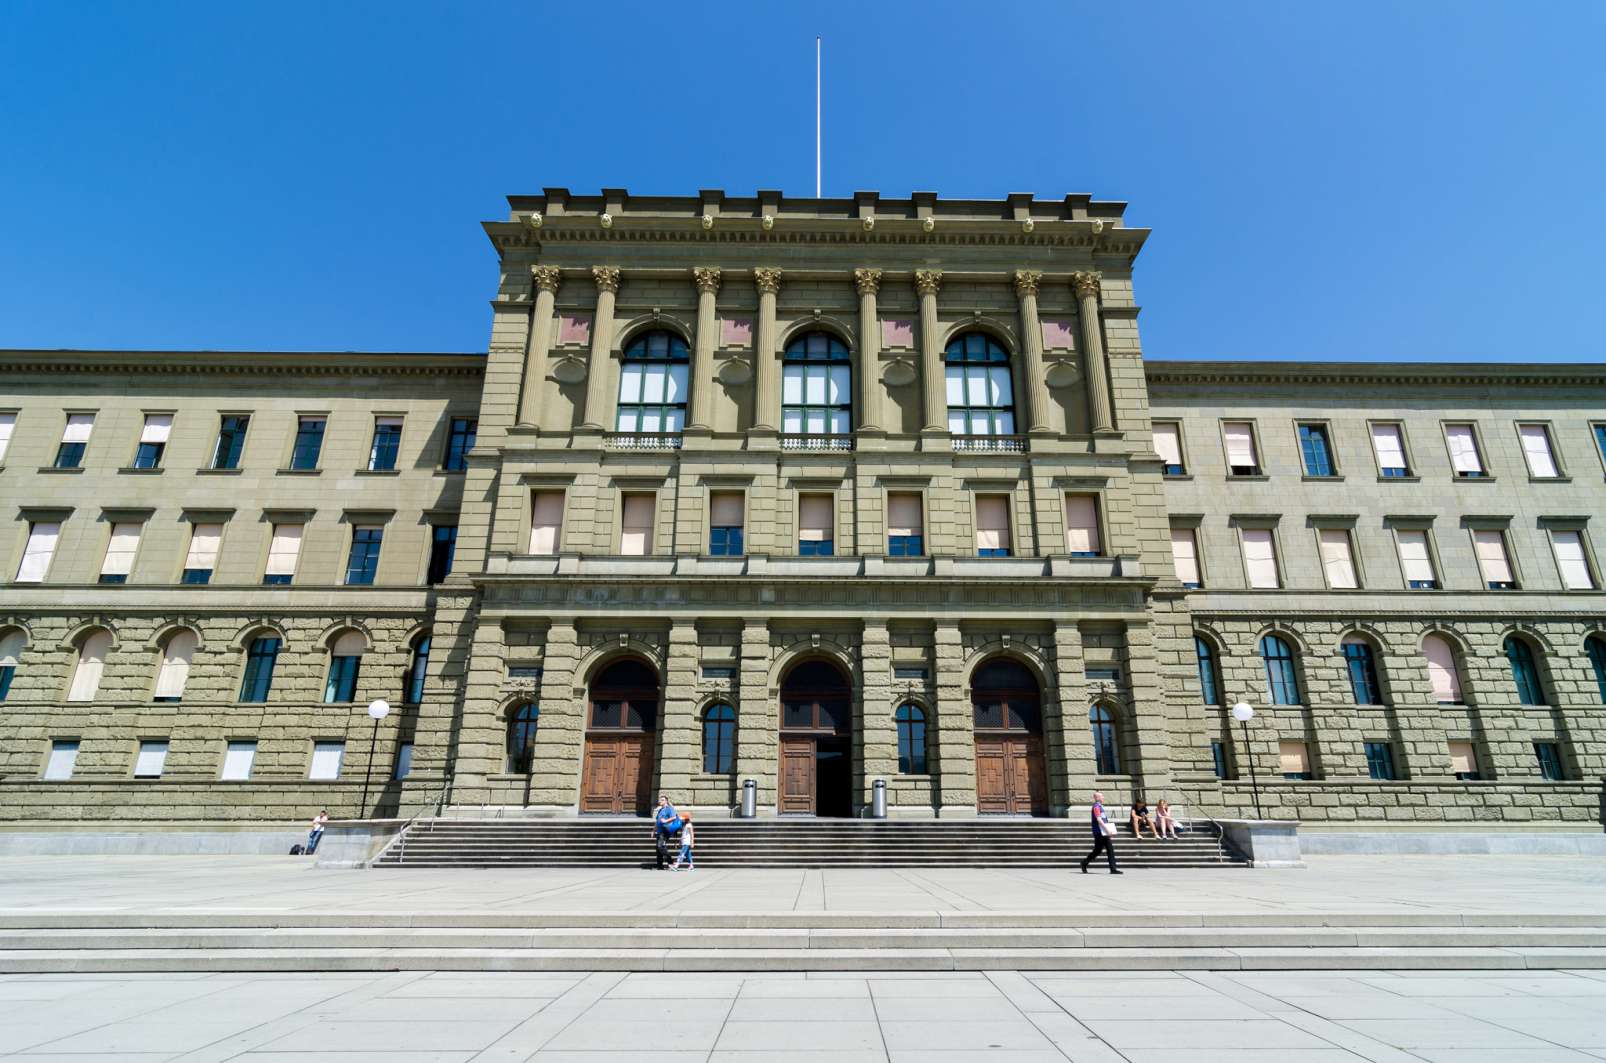 Технологический университет Цюриха. ETH Zurich - Swiss Federal Institute of Technology. ETH Zurich (Швейцария). Цюрихский университет 19 век.